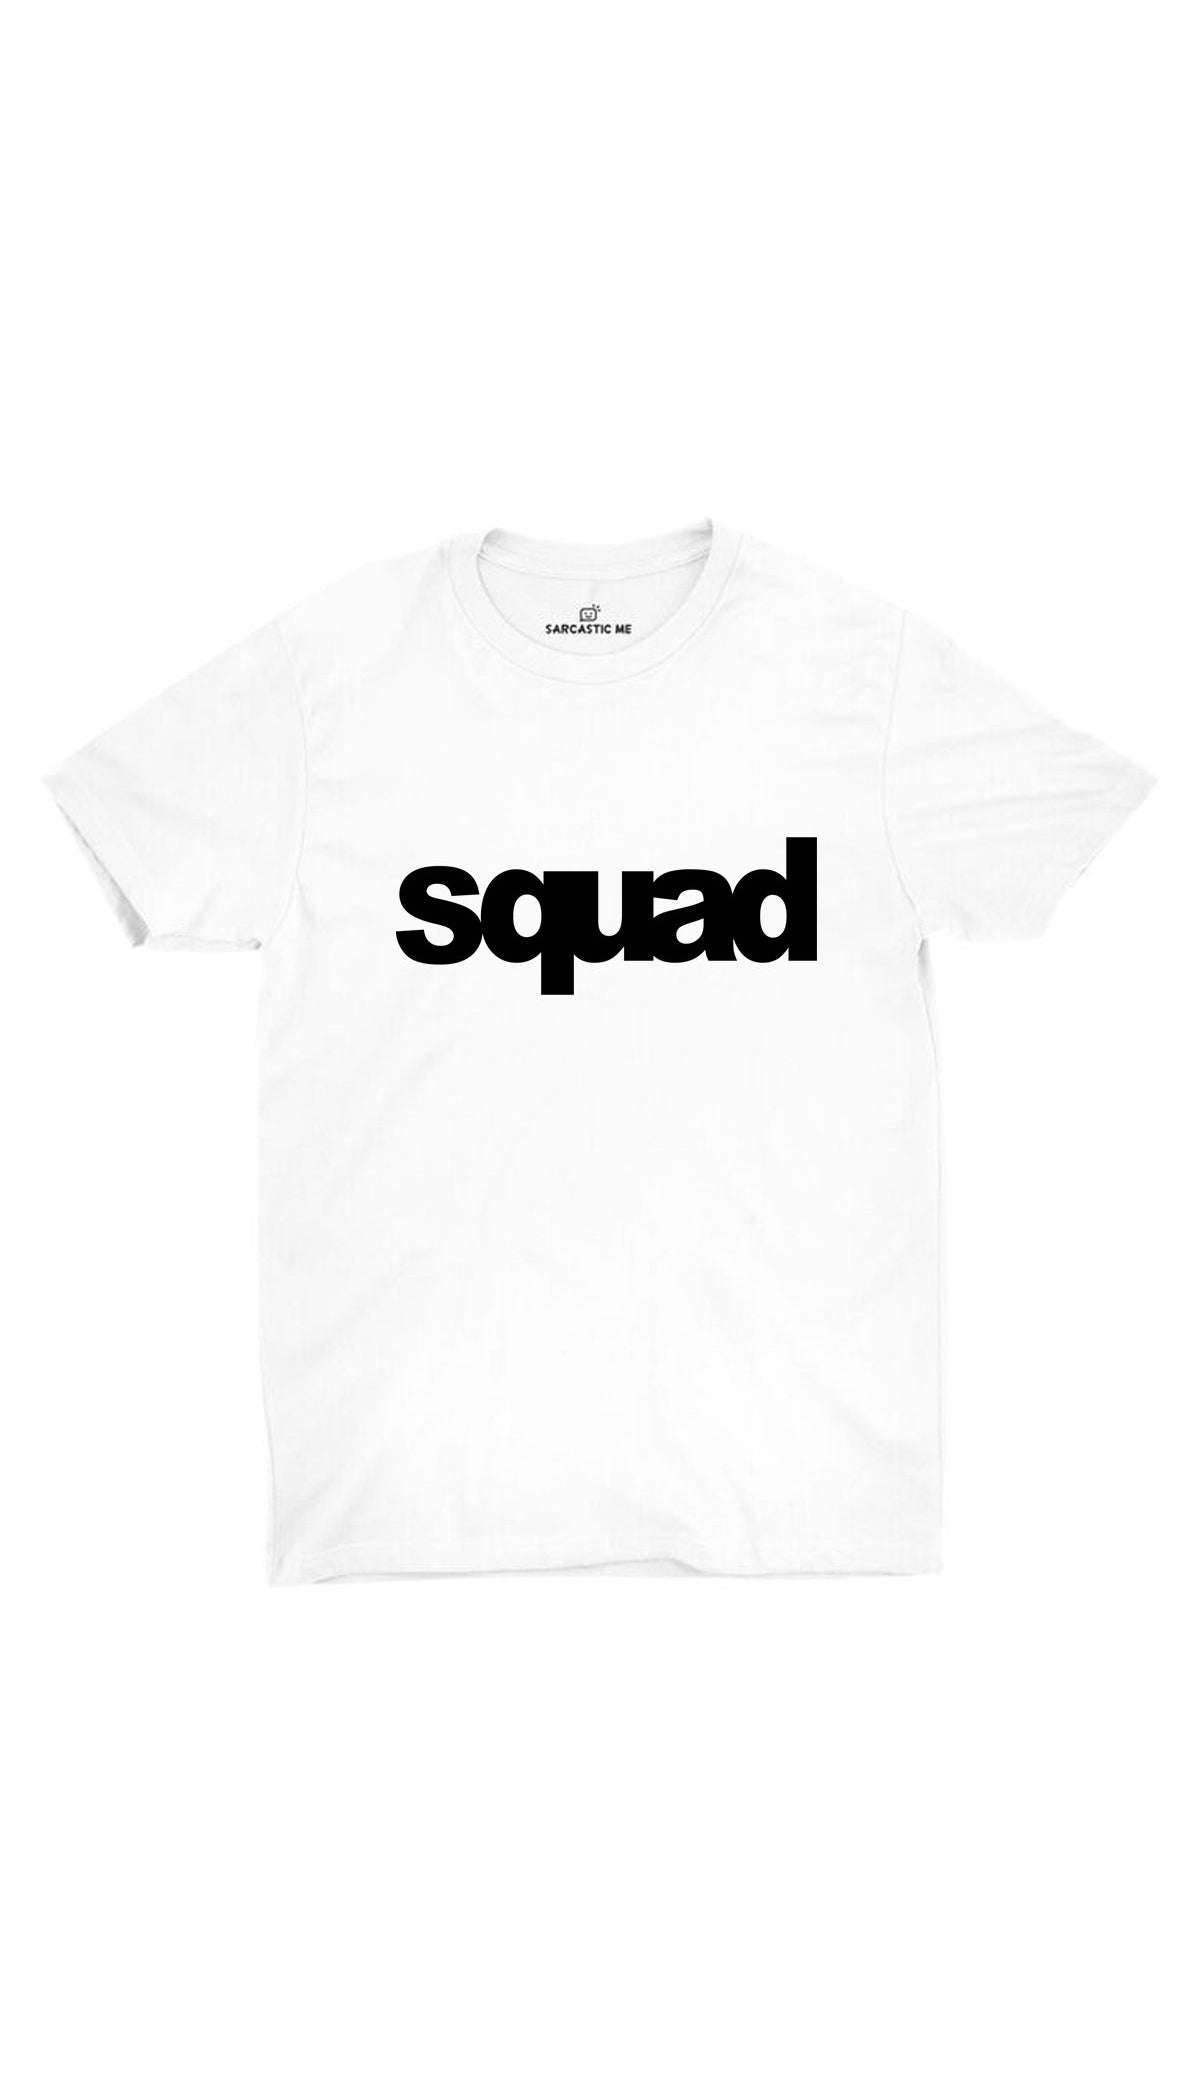 Squad Unisex White T-shirt | Sarcastic ME